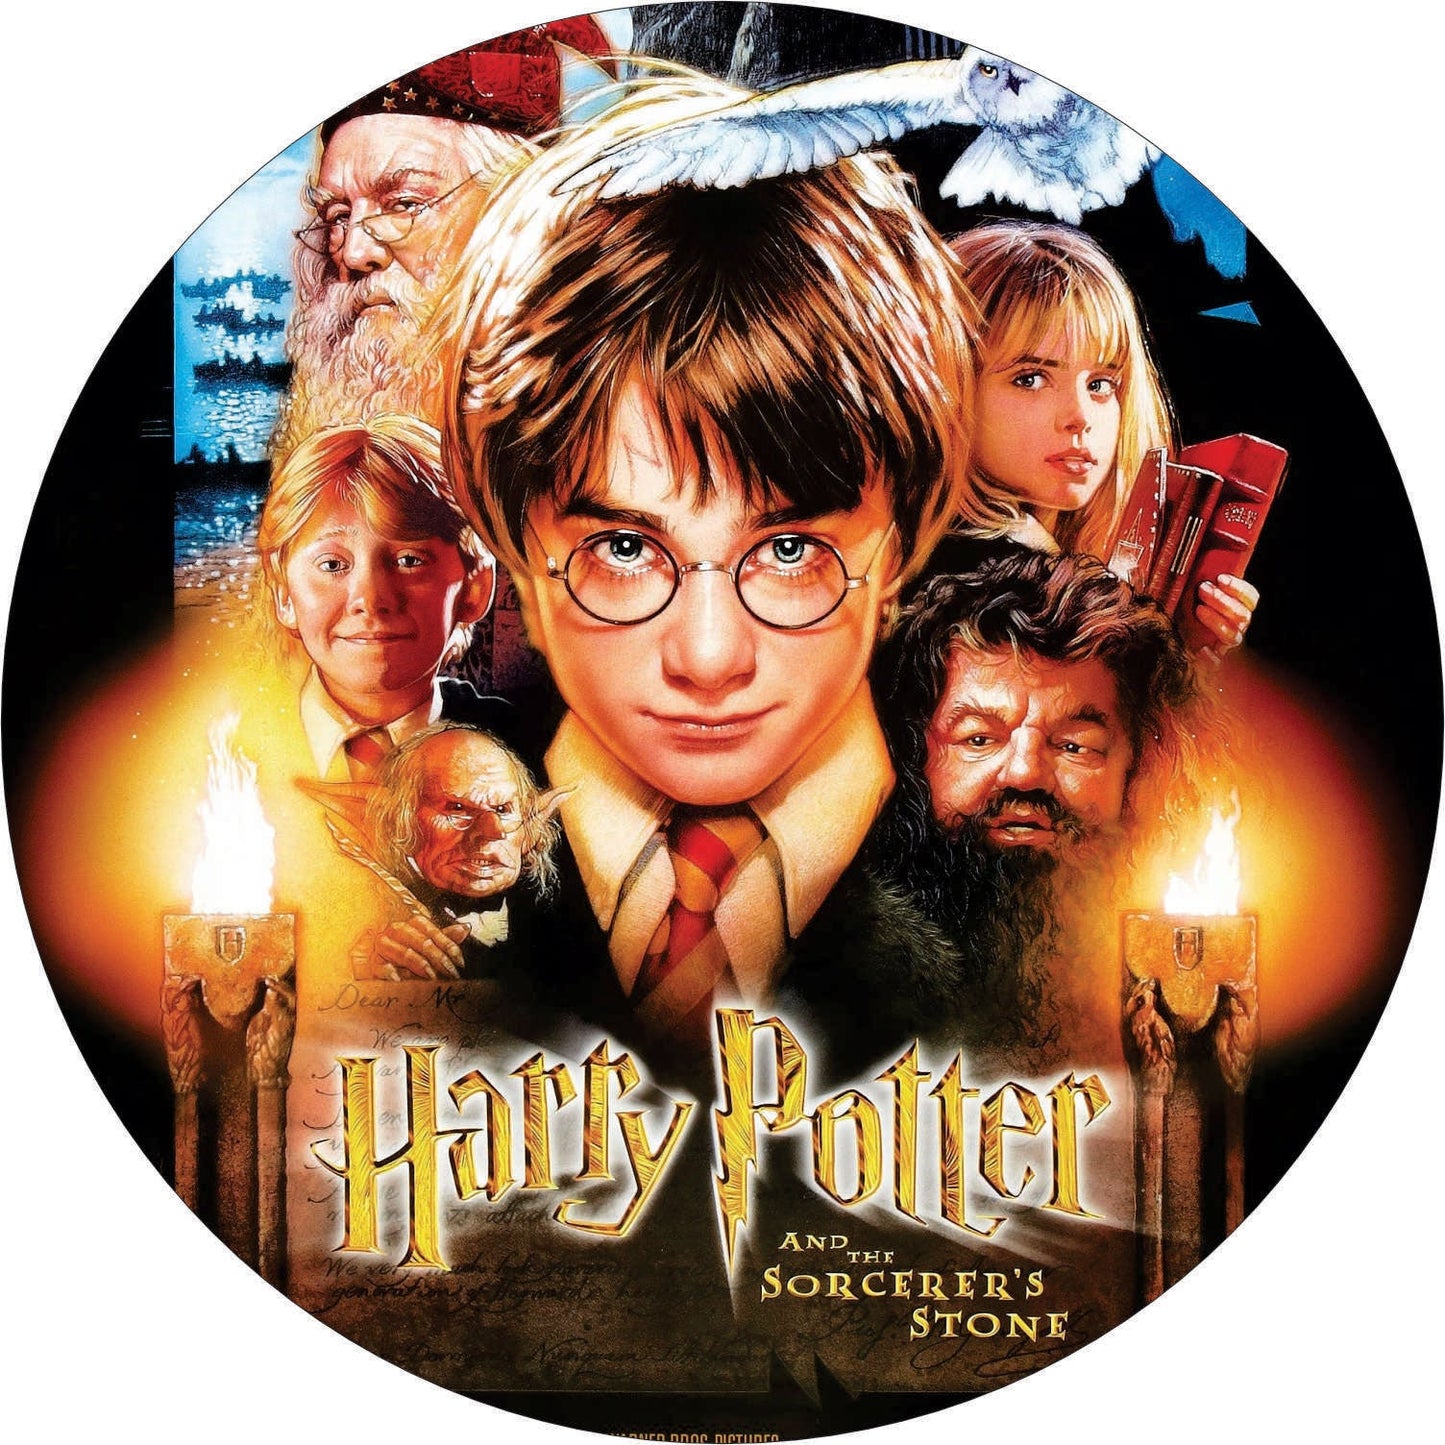 079-Single-sided illuminated sign - Harry Potter